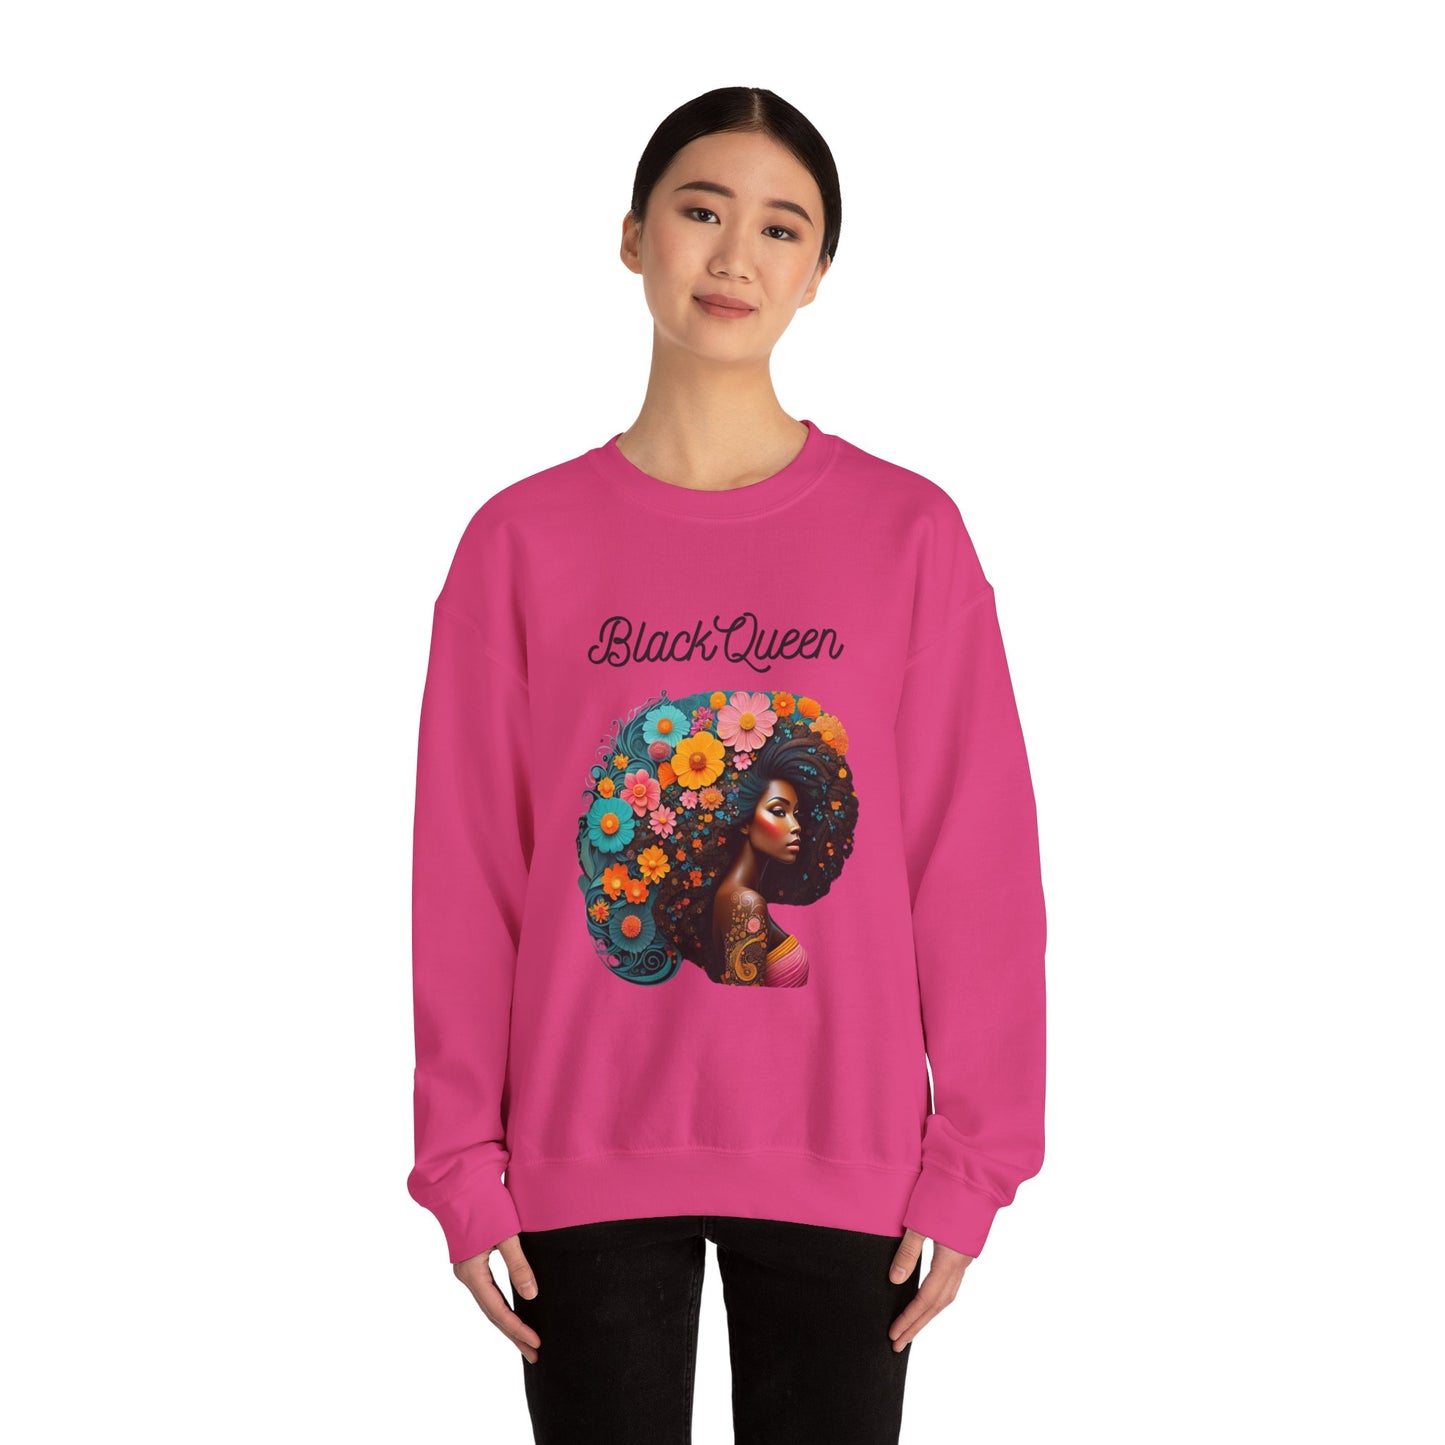 Unisex "E=Black Girl Magic2" Heavy Blend™ Crewneck Sweatshirt